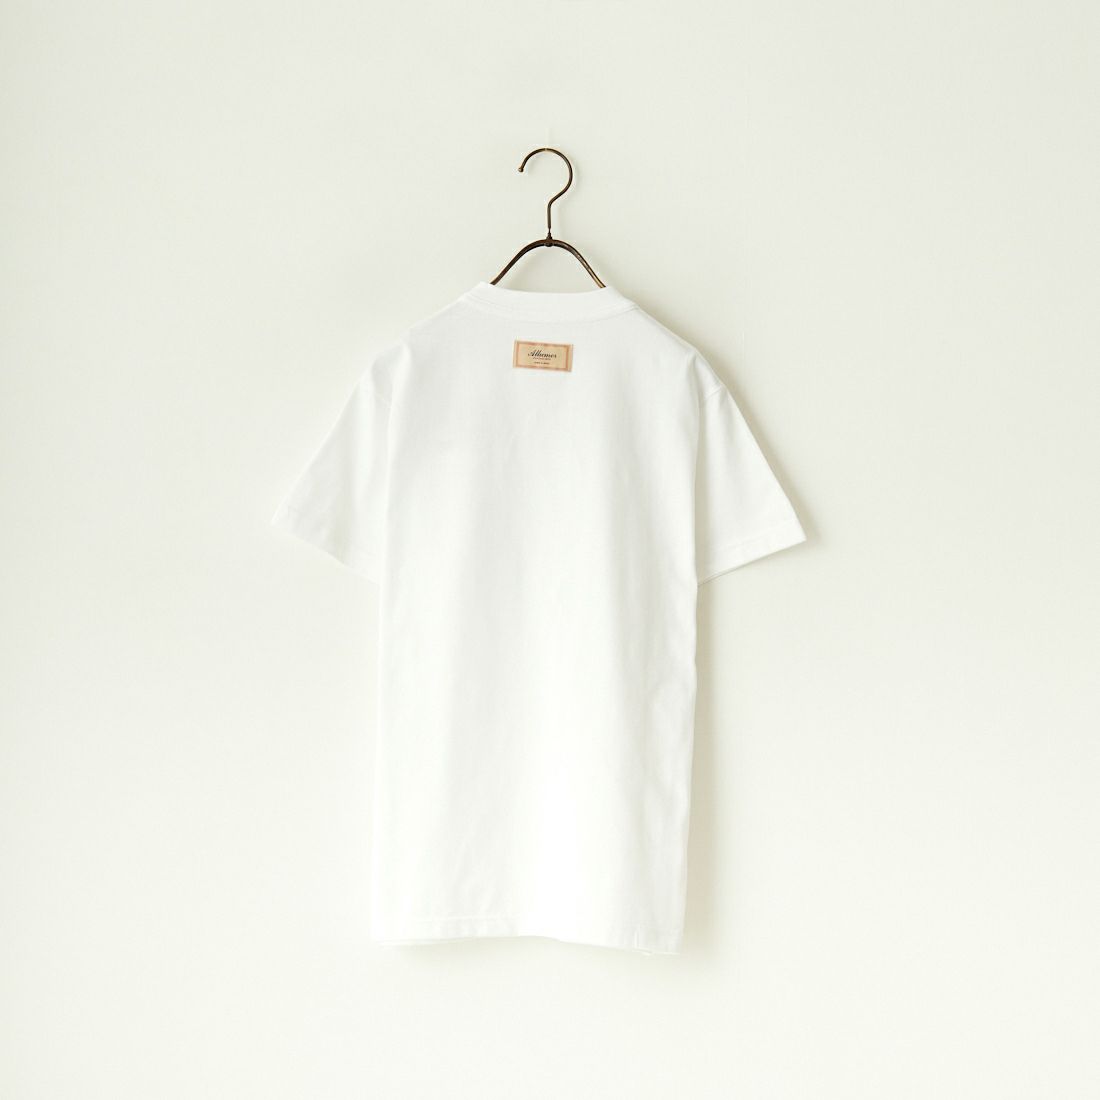 ALLUMER [アリュメール] オーセンティックリンガーTシャツ [8241710] 900 WHITE